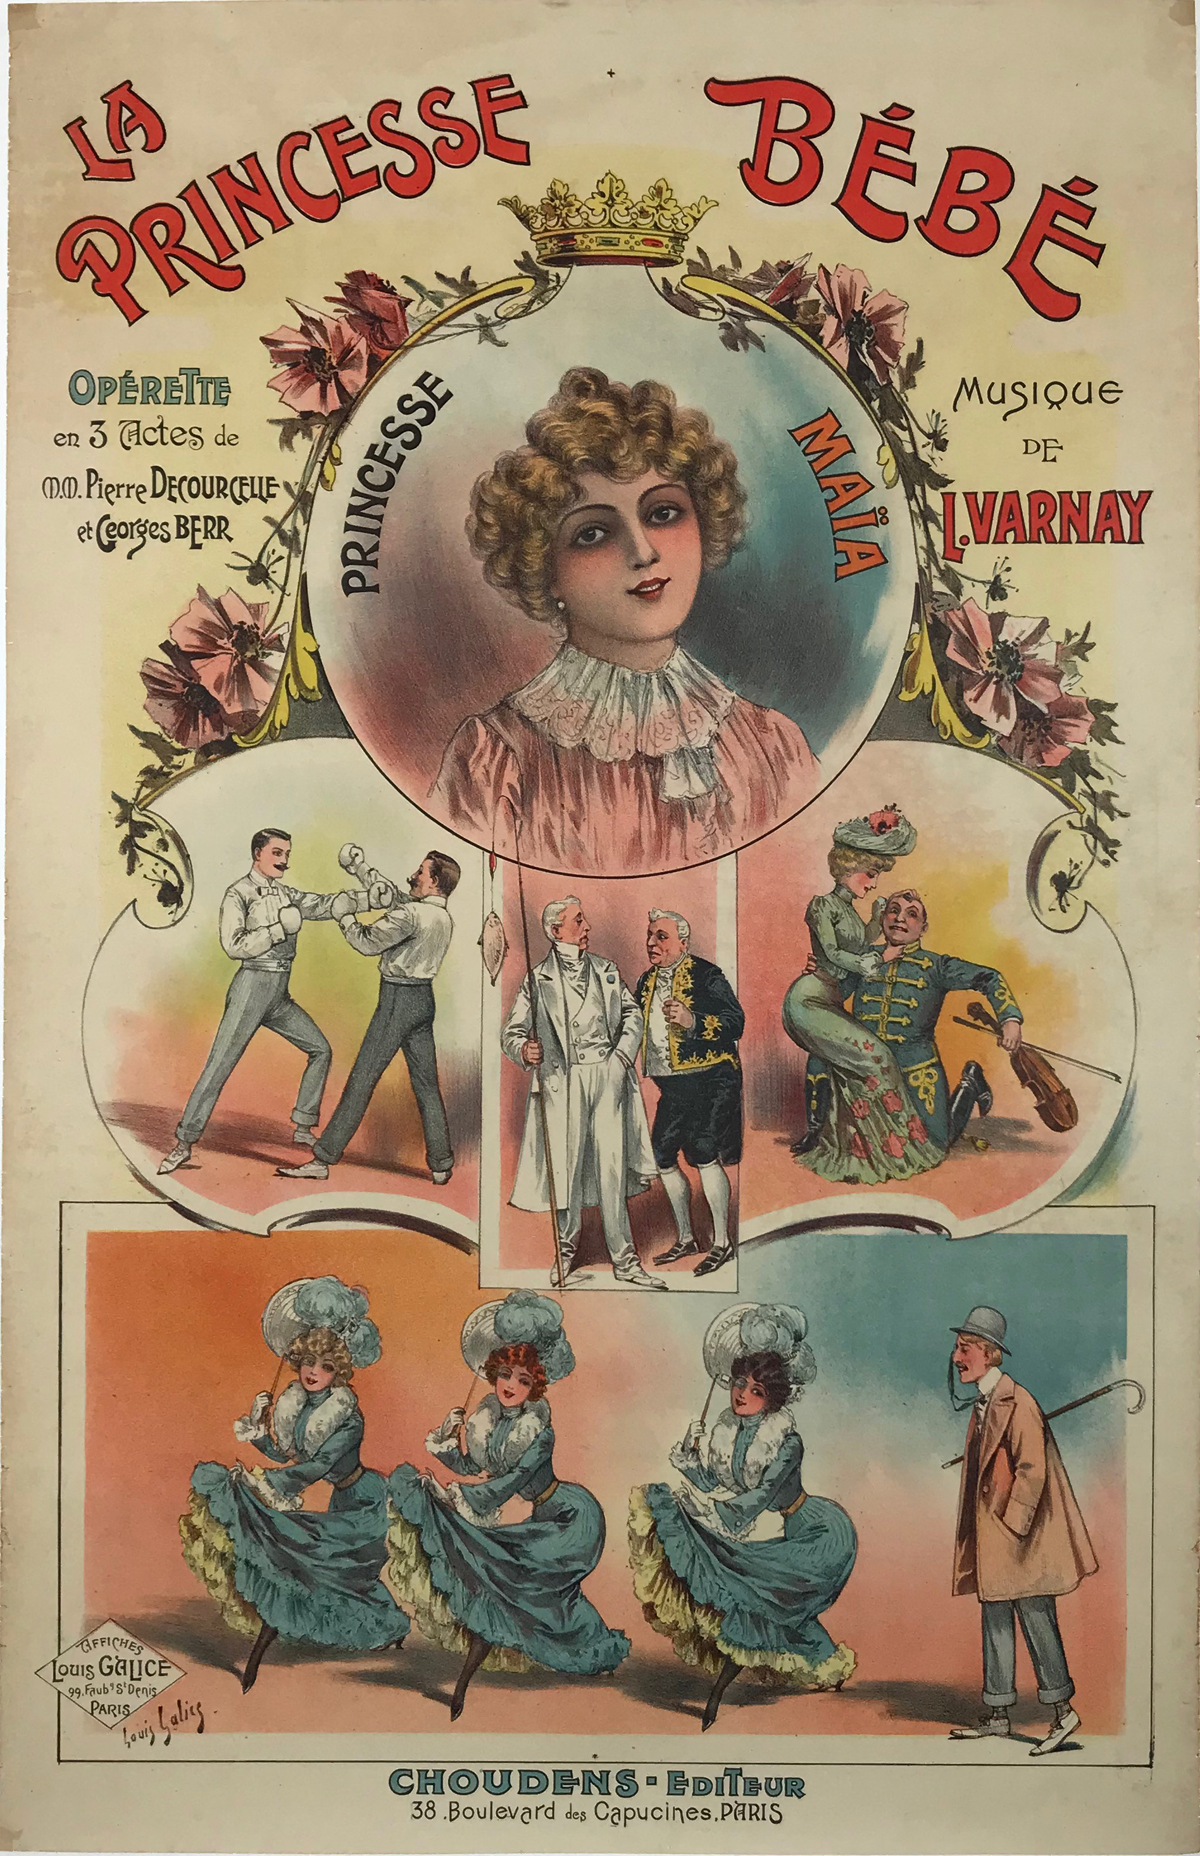 La Princesse Bebe Operette Original Vintage Poster by Louis Galice from 1894 France